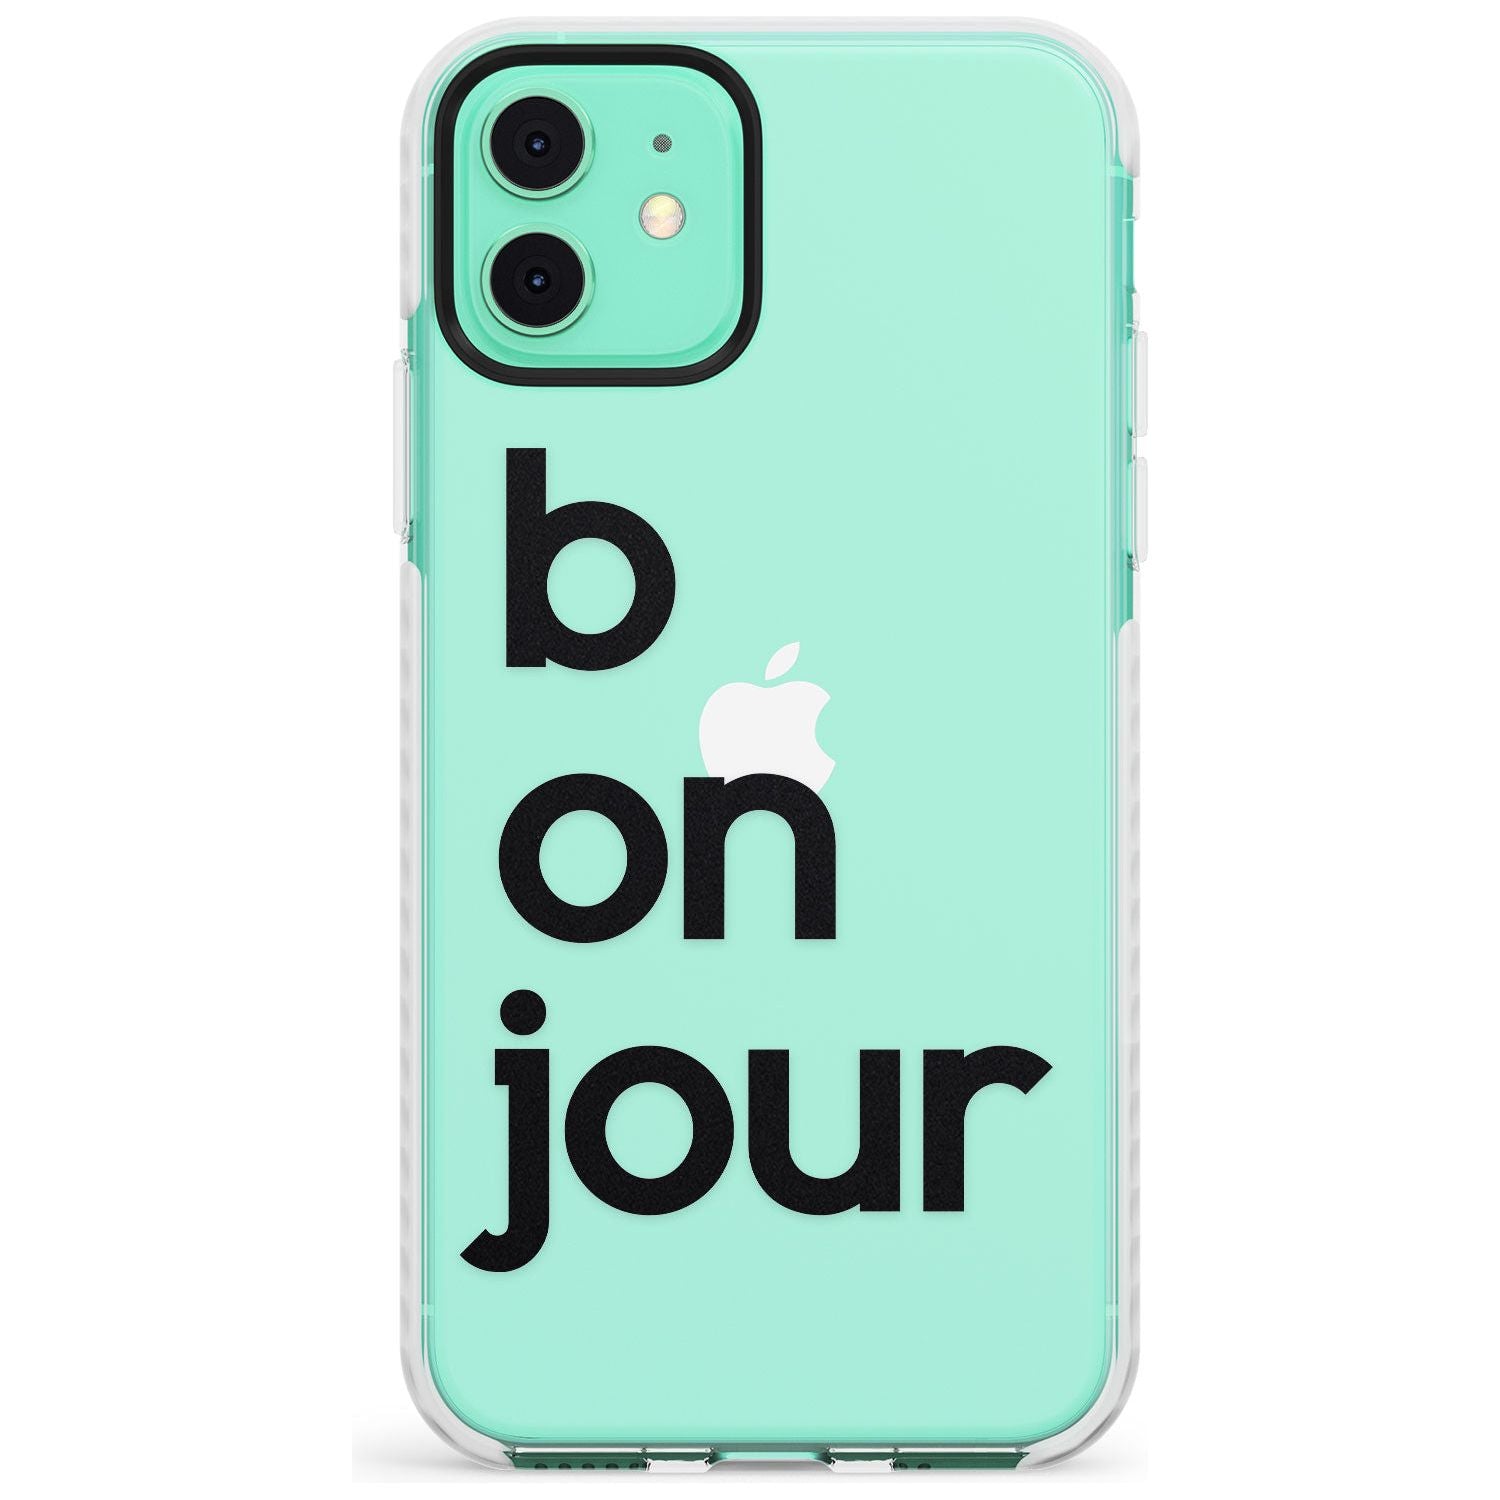 Bonjour Slim TPU Phone Case for iPhone 11